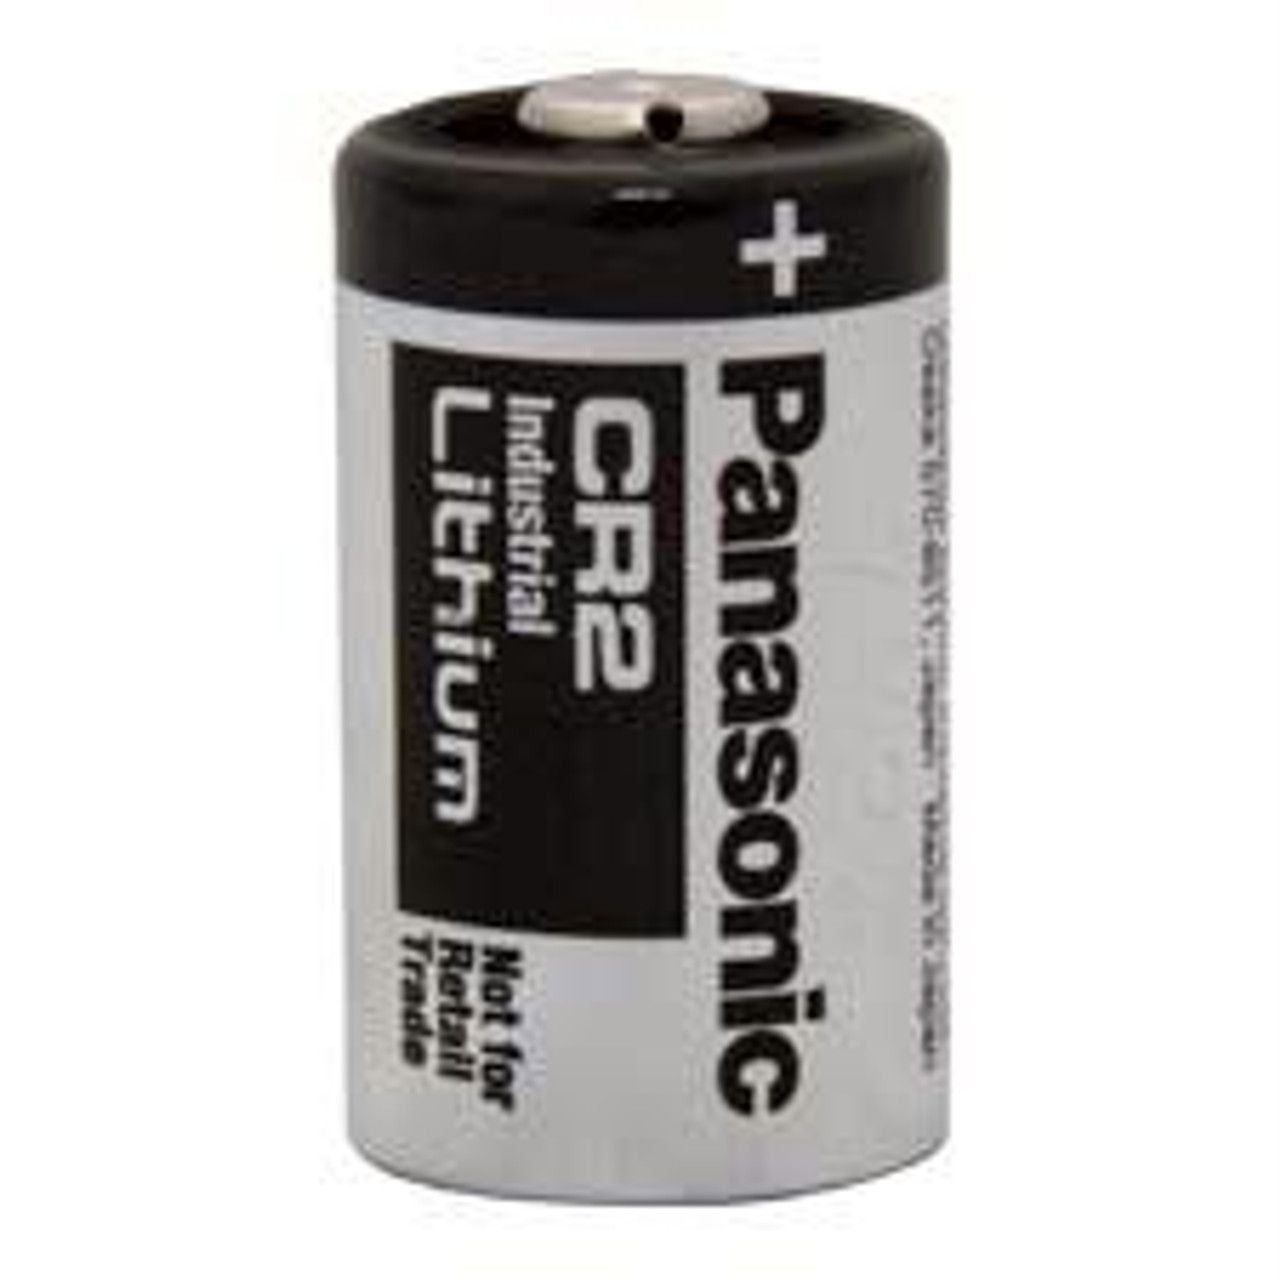 Panasonic Cr2 3v Lithium Battery